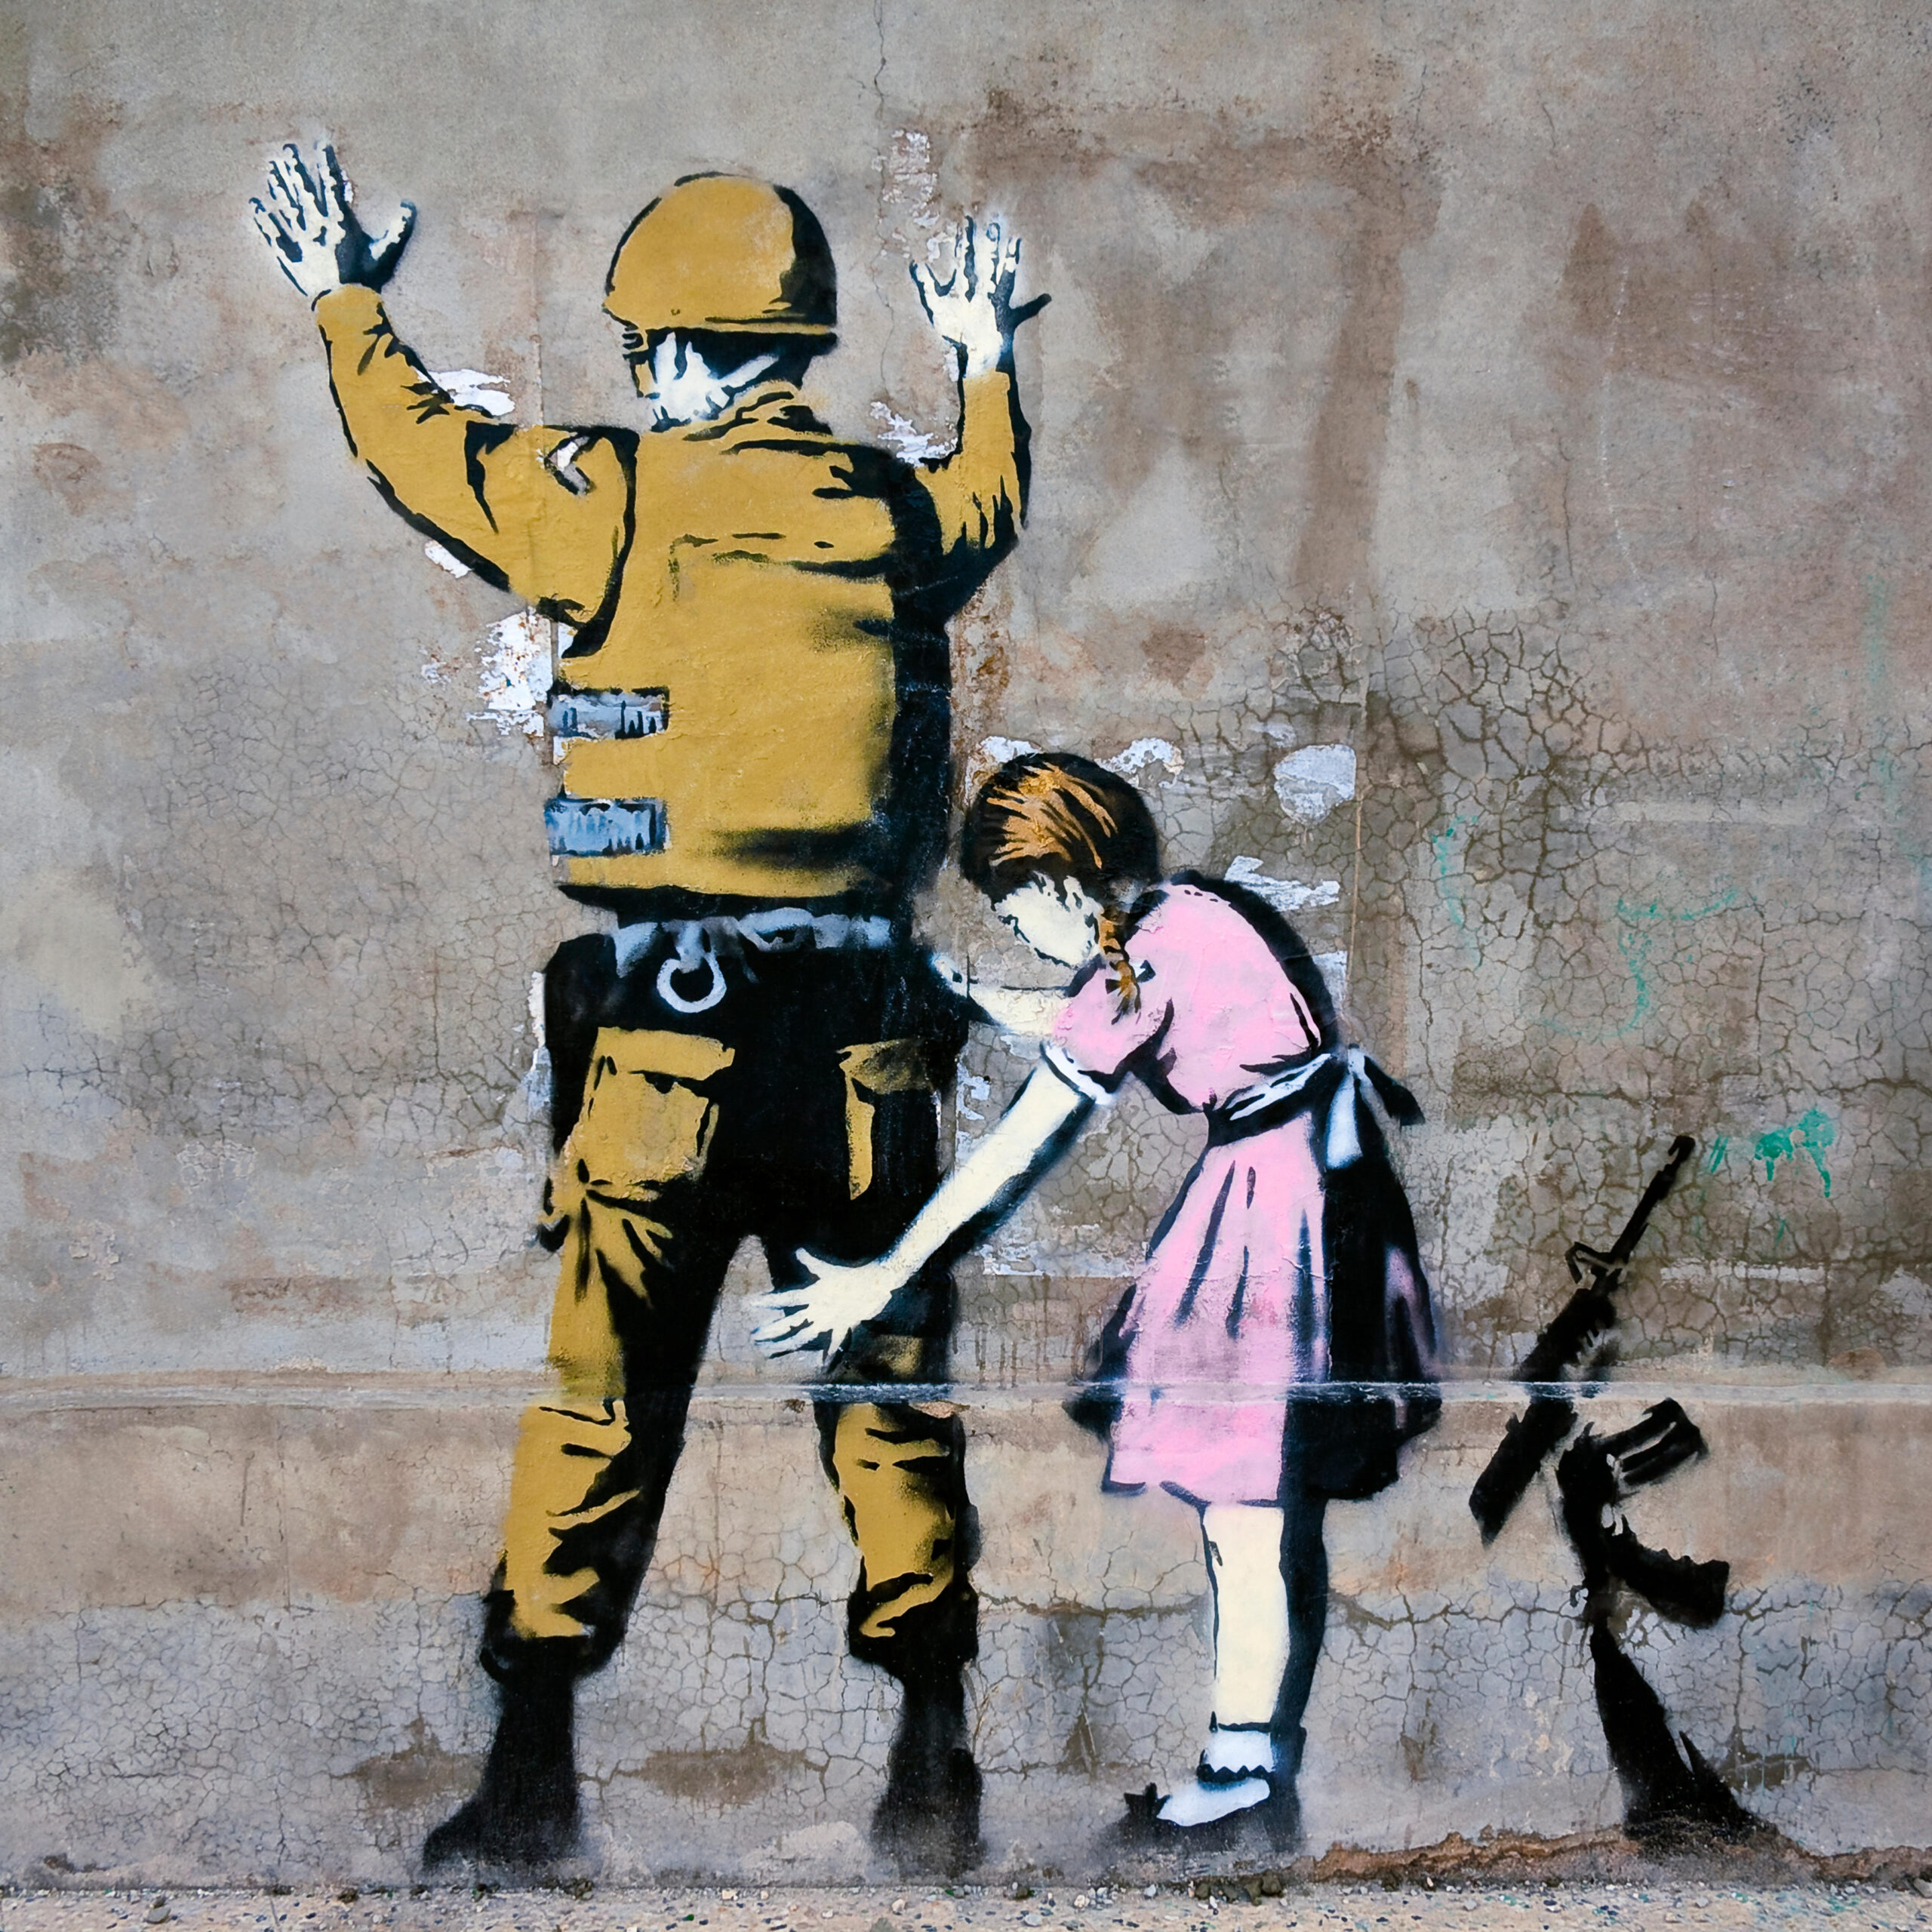 Girl Frisking Soldier by Banksy in Bethlehem, Palestine, appeared in 2007